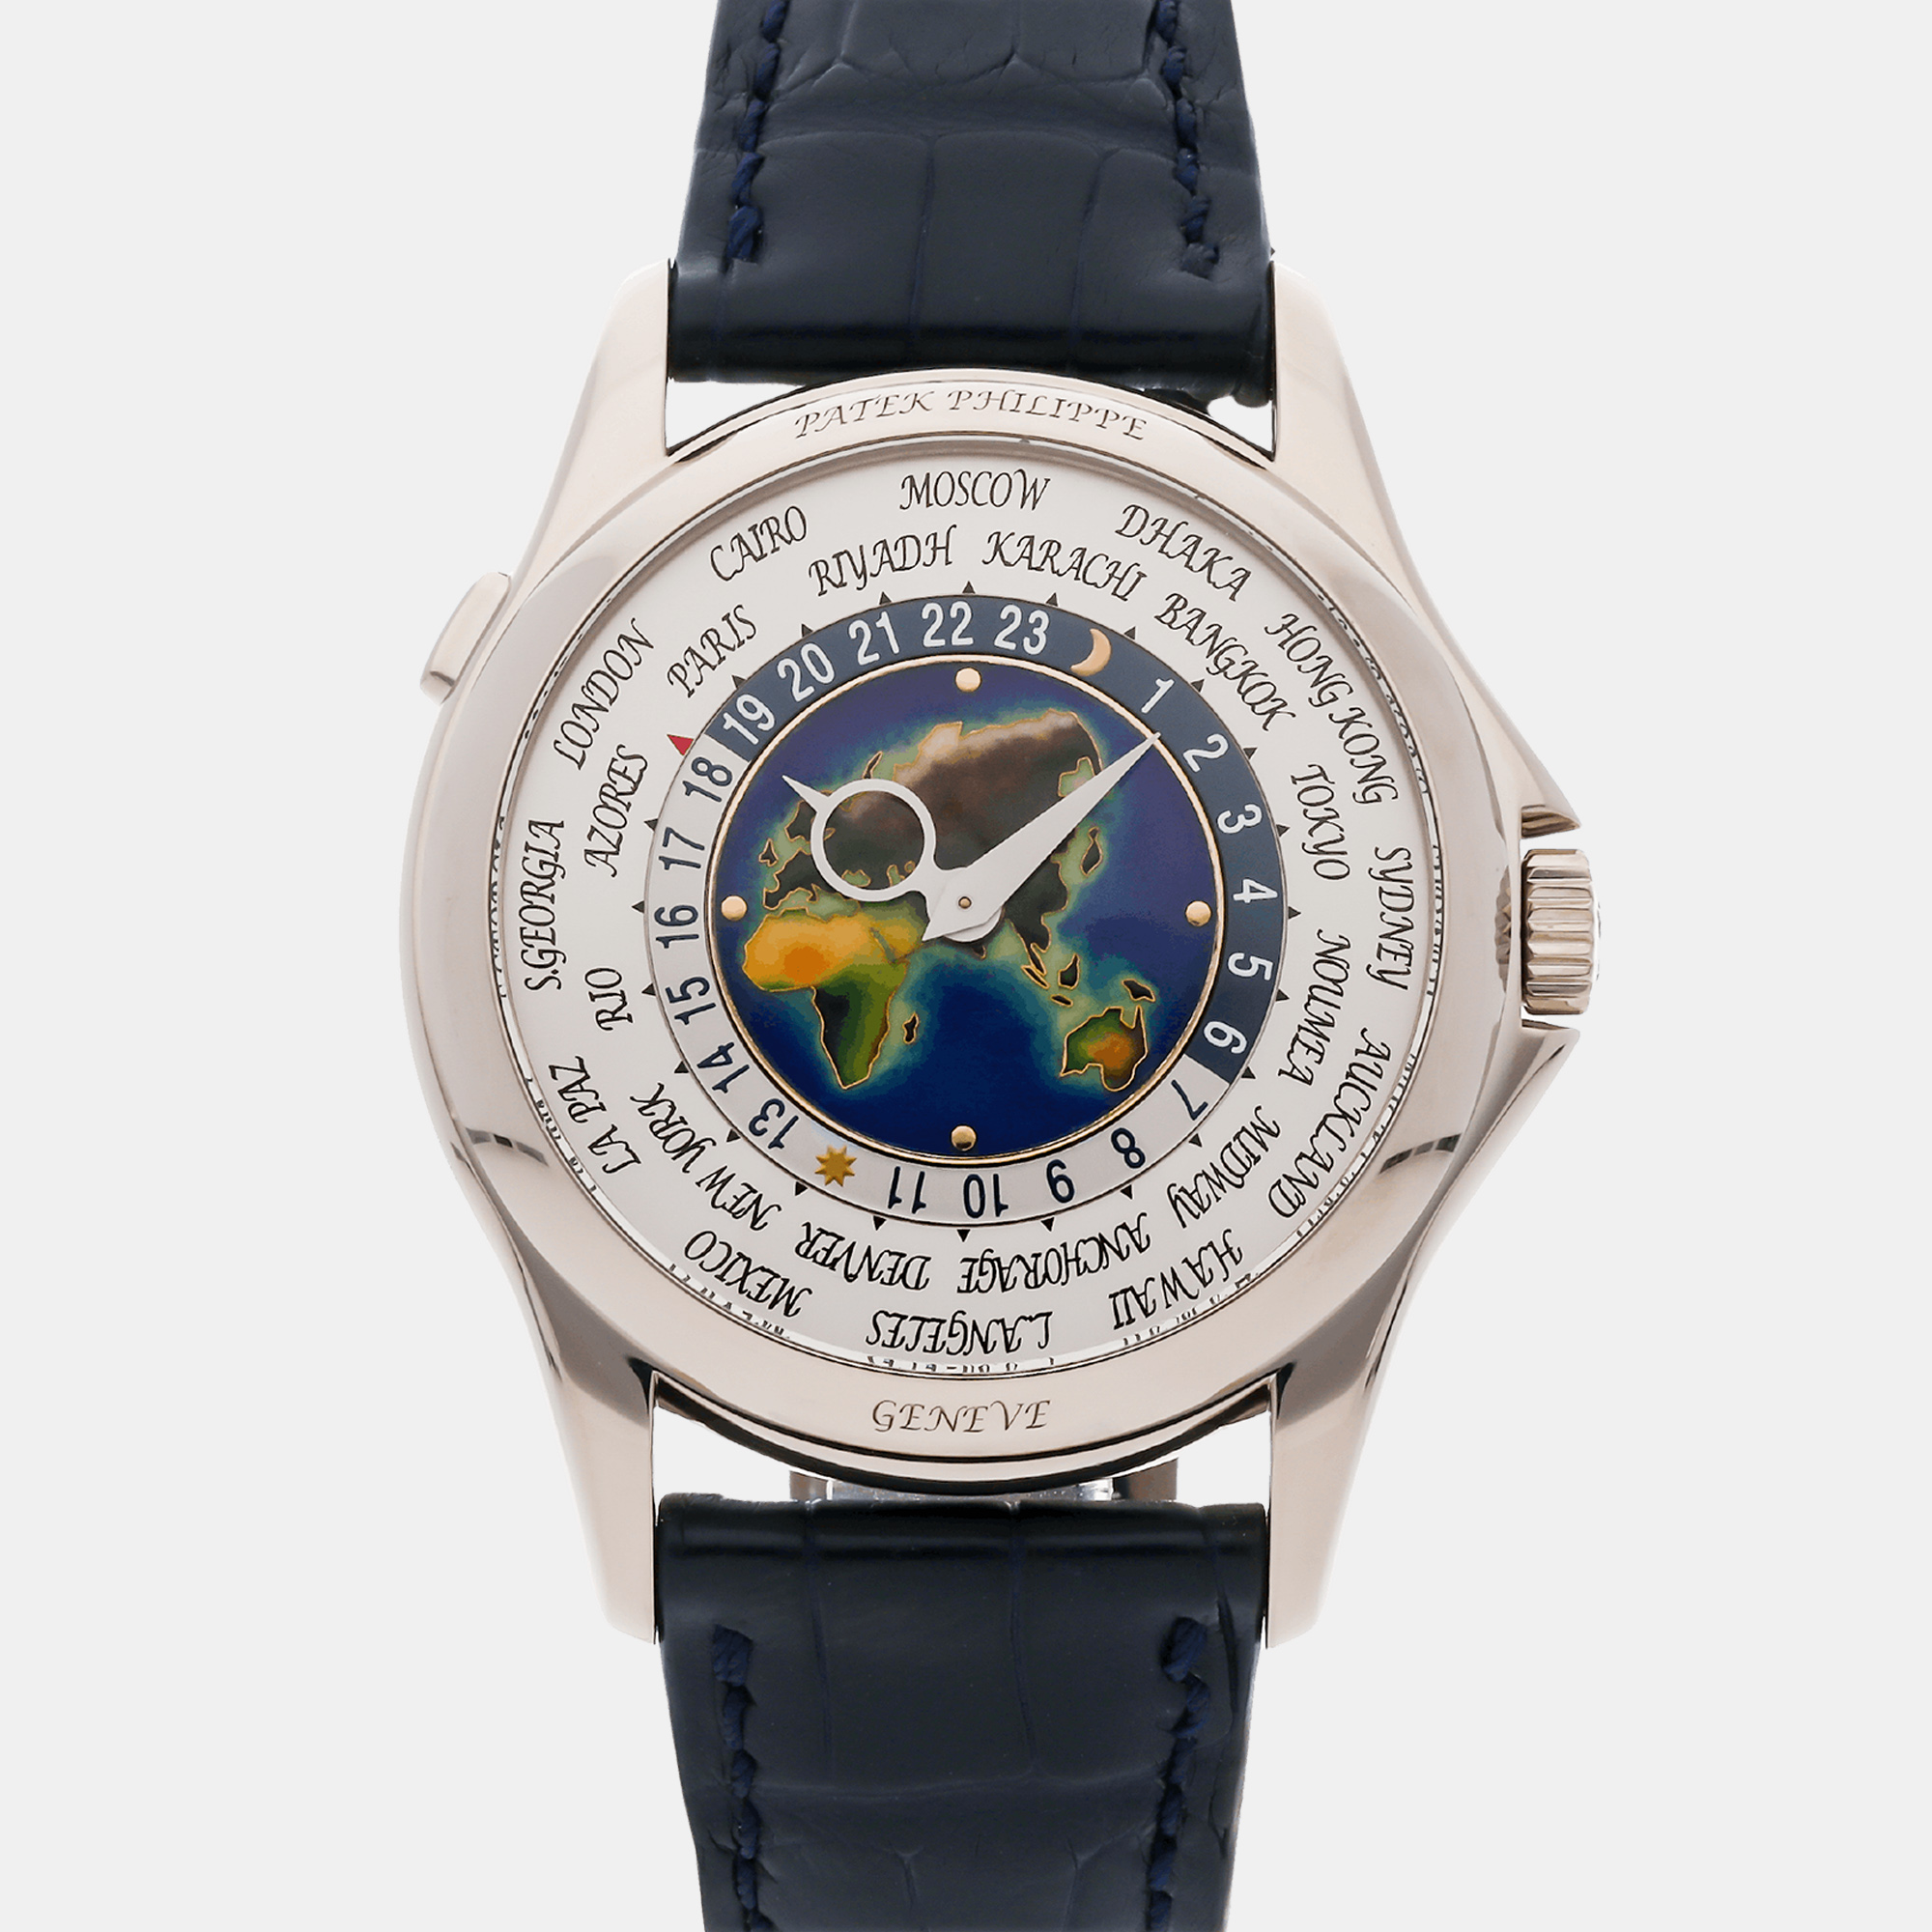 Patek philippe blue 18k white gold complications 5131g-010 automatic men's wristwatch 40 mm